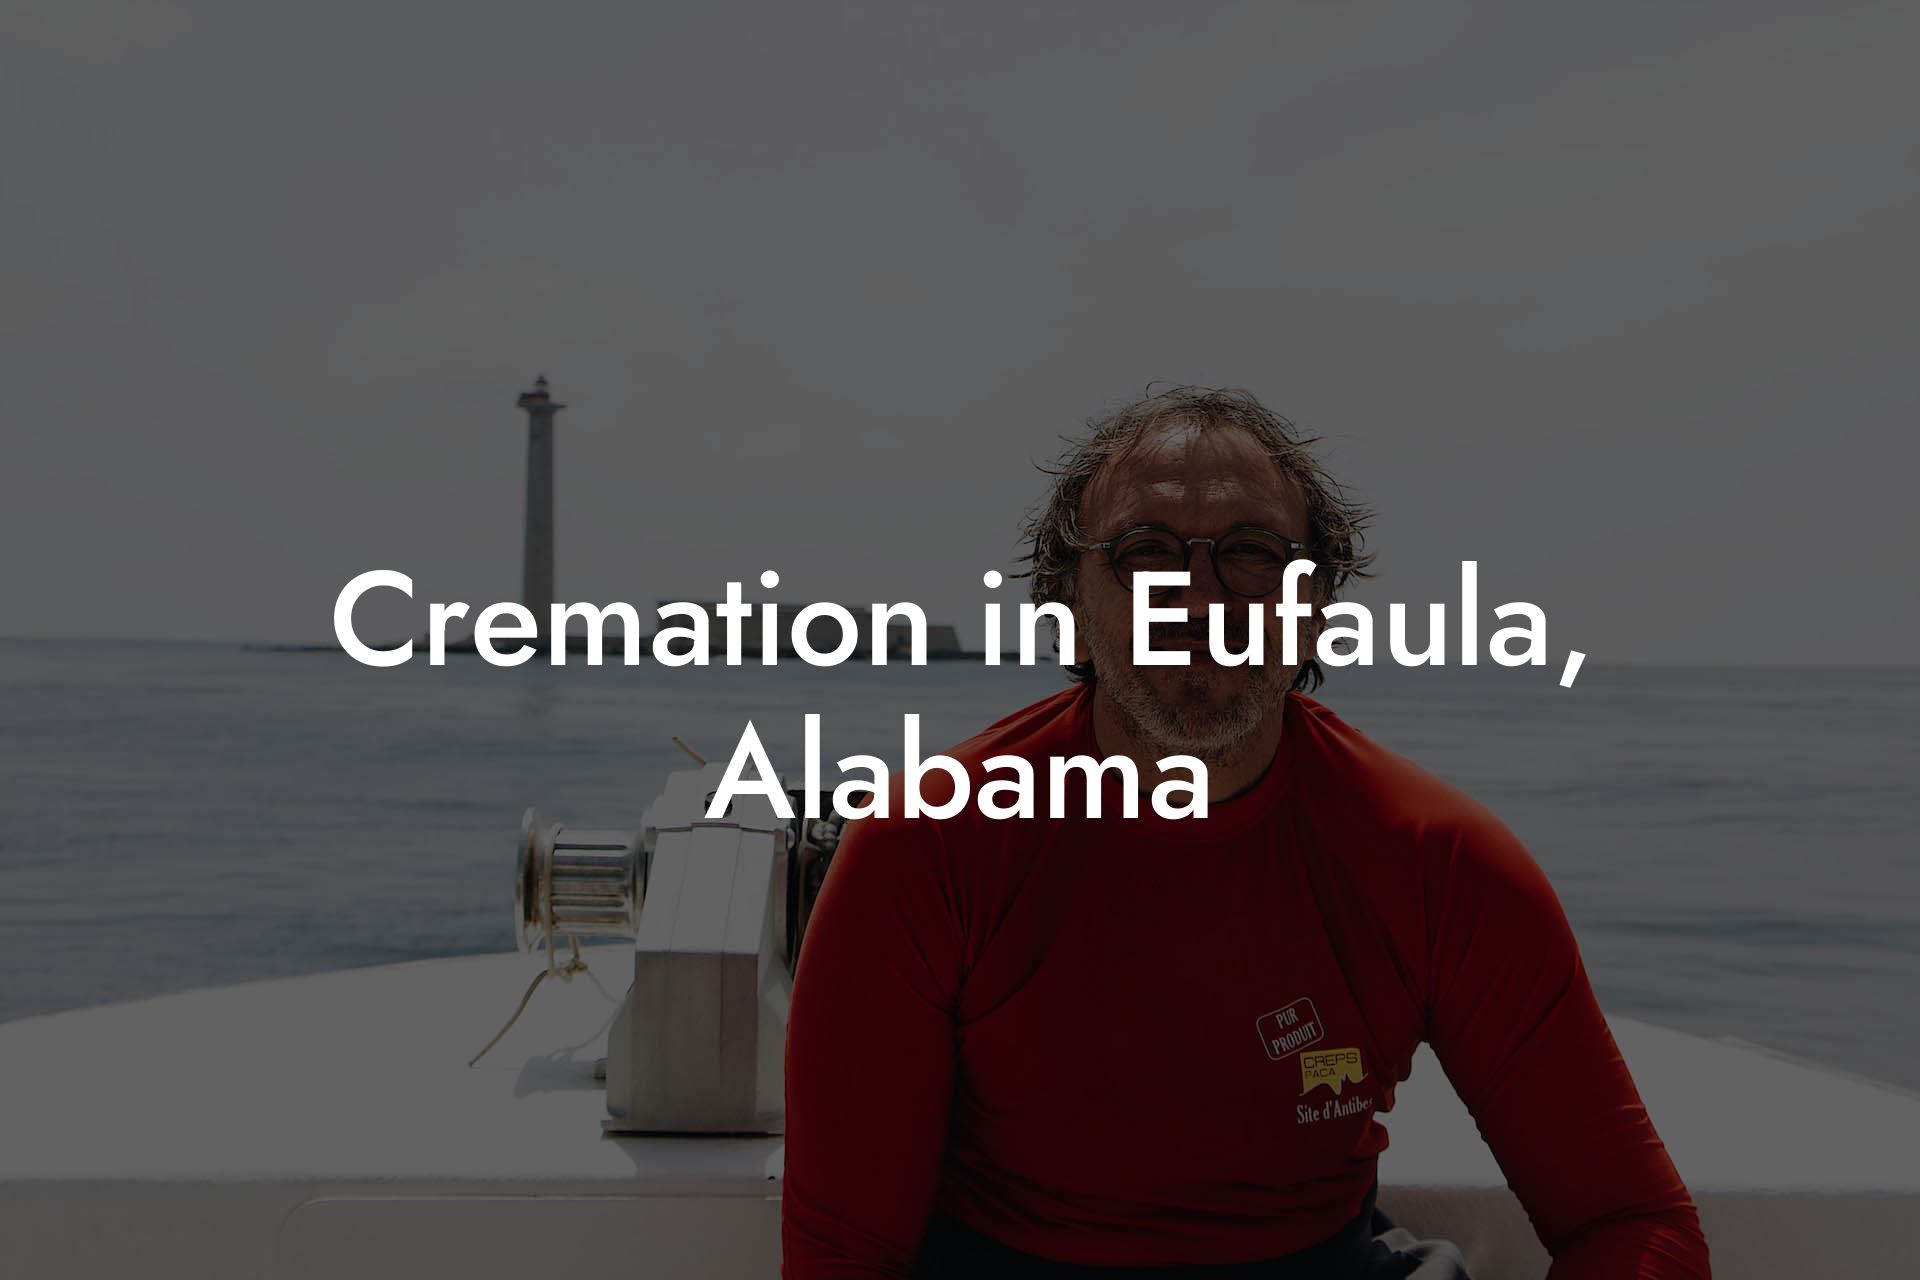 Cremation in Eufaula, Alabama